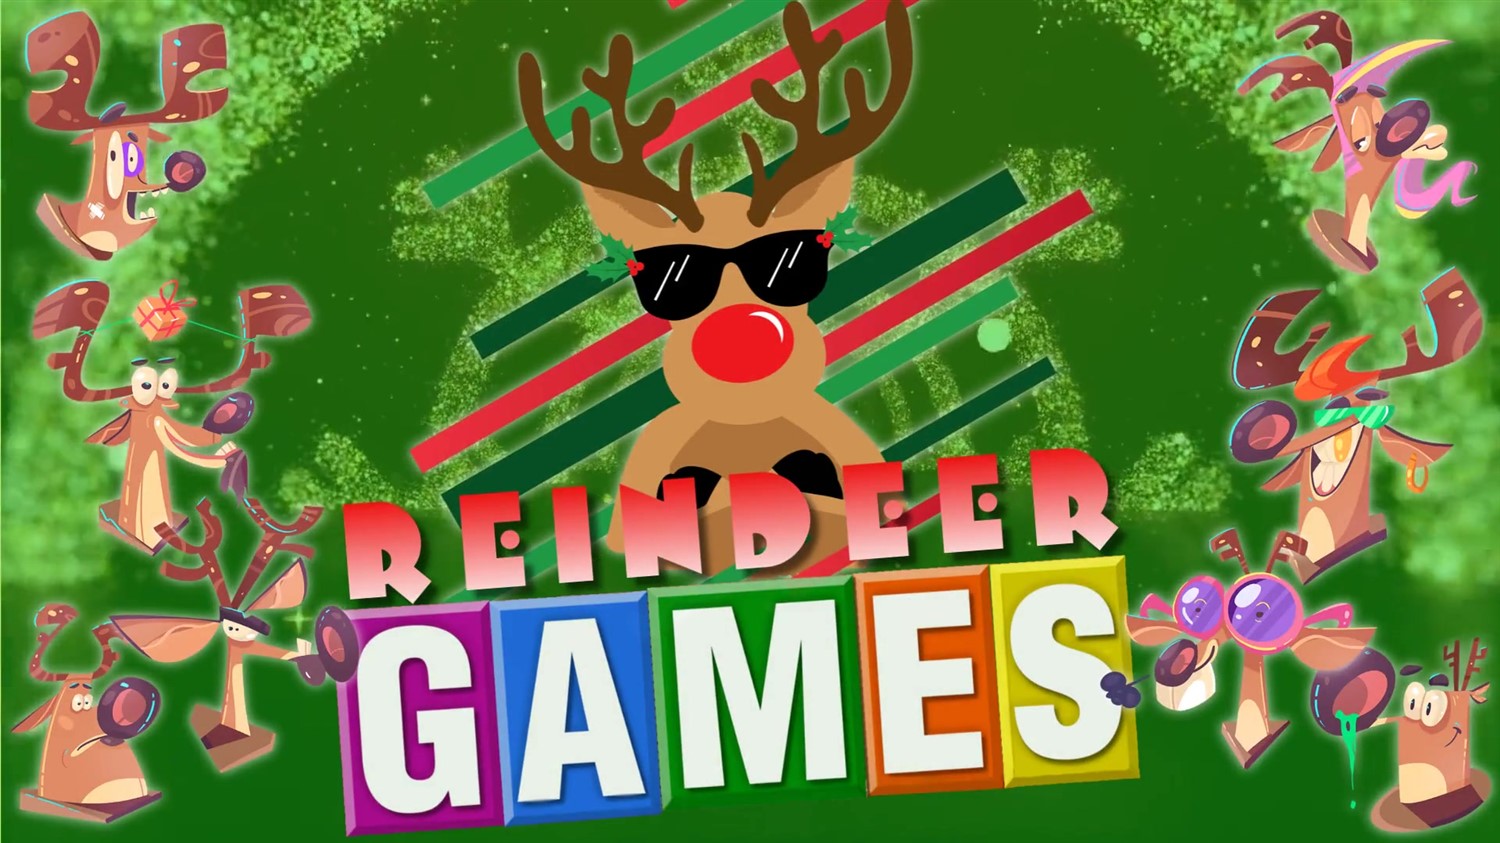 REINDEER GAMES Fun Holiday Game Show for All Ages on dic. 03, 19:00@FFX Theatre - Elegir asientoCompra entradas y obtén información enFamily Fun Xperience tickets.ffxshow.org